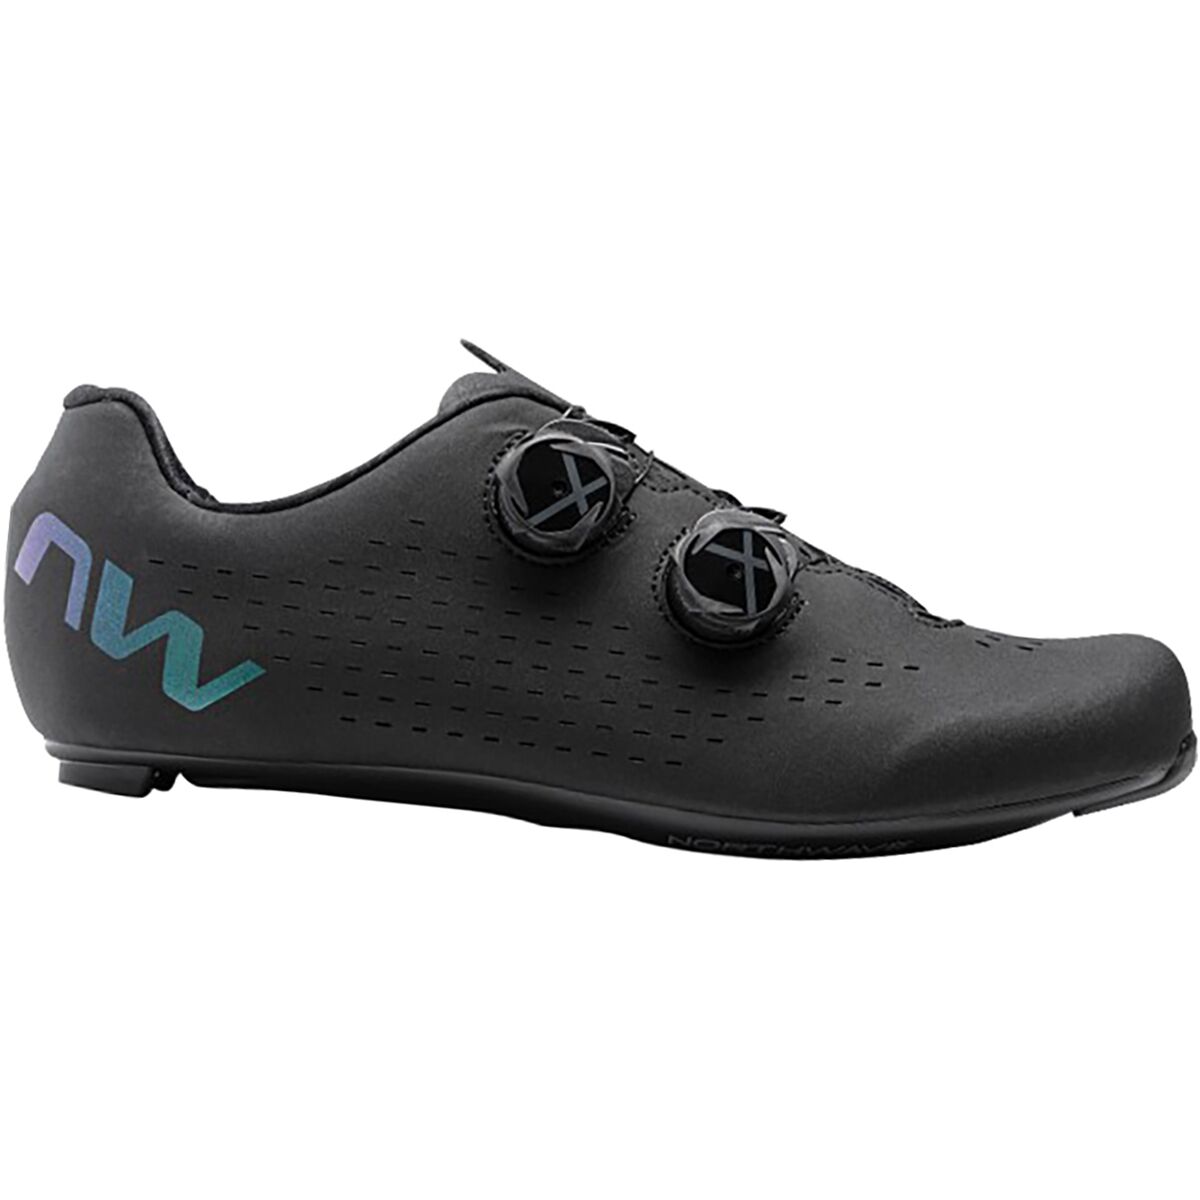 Northwave Revolution 3 Cycling Shoe - Men's